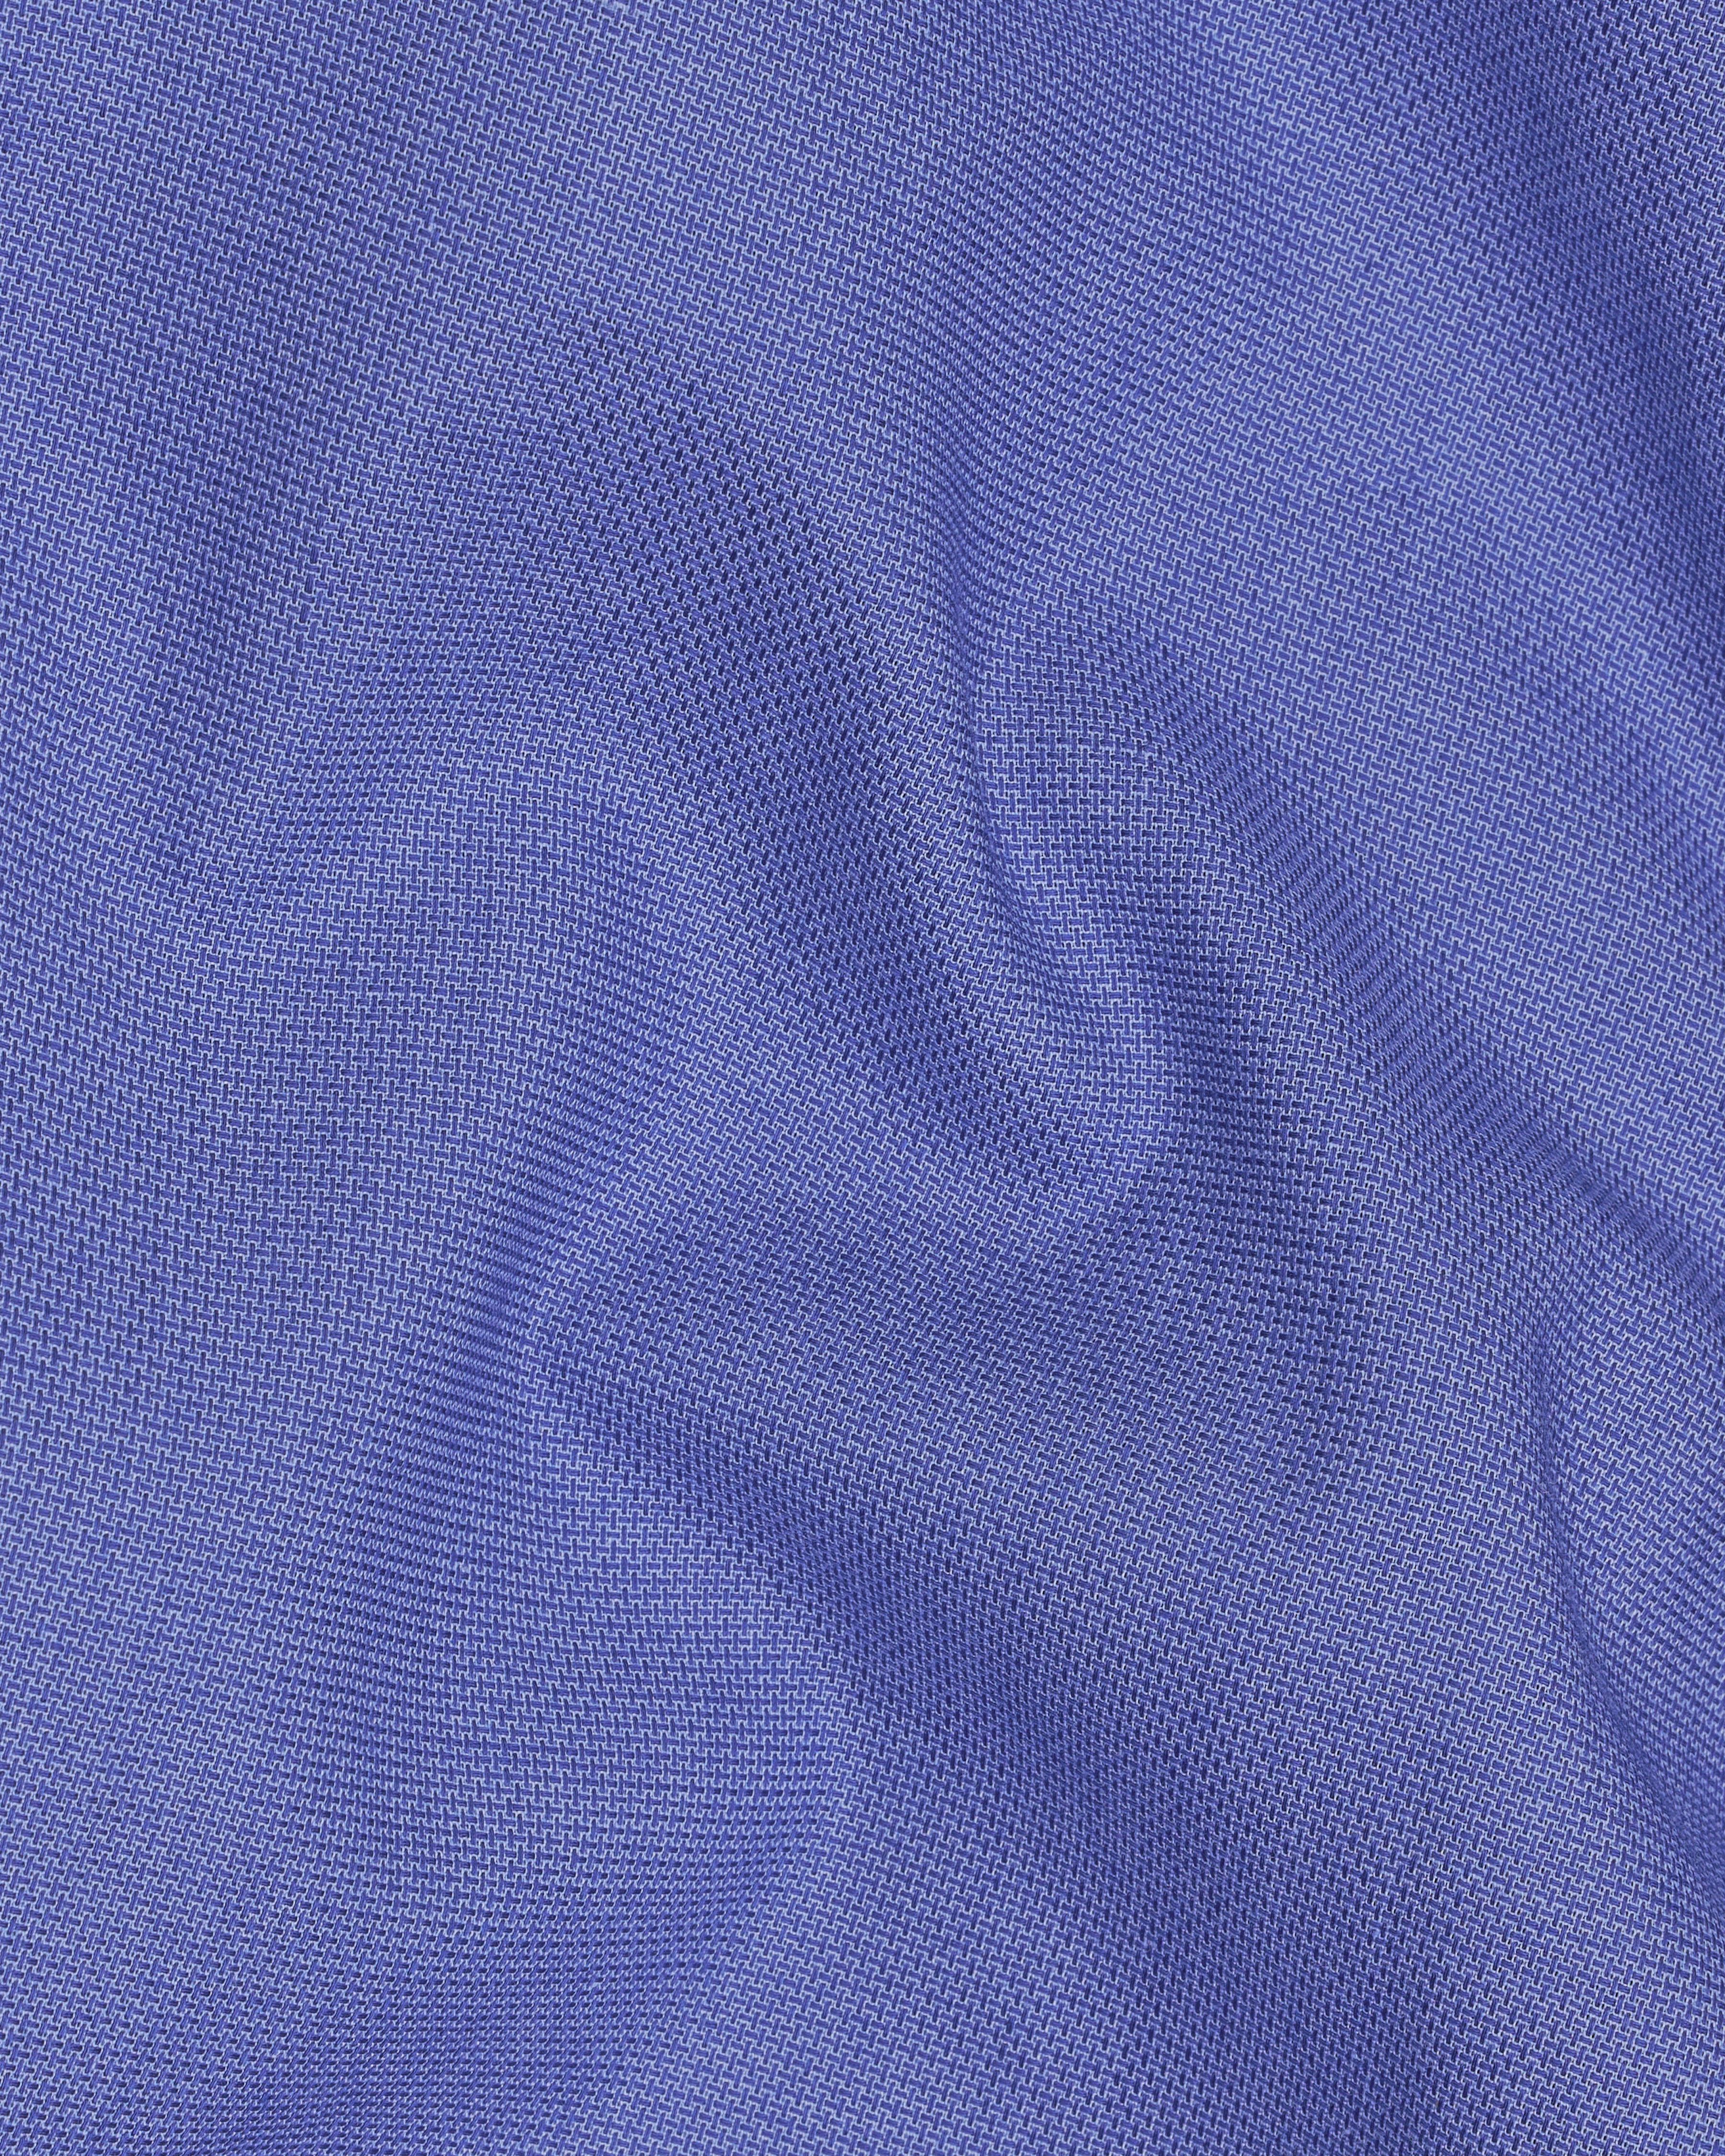 Deluge Blue Dobby Textured Giza Cotton Shorts SR234-28, SR234-30, SR234-32, SR234-34, SR234-36, SR234-38, SR234-40, SR234-42, SR234-44